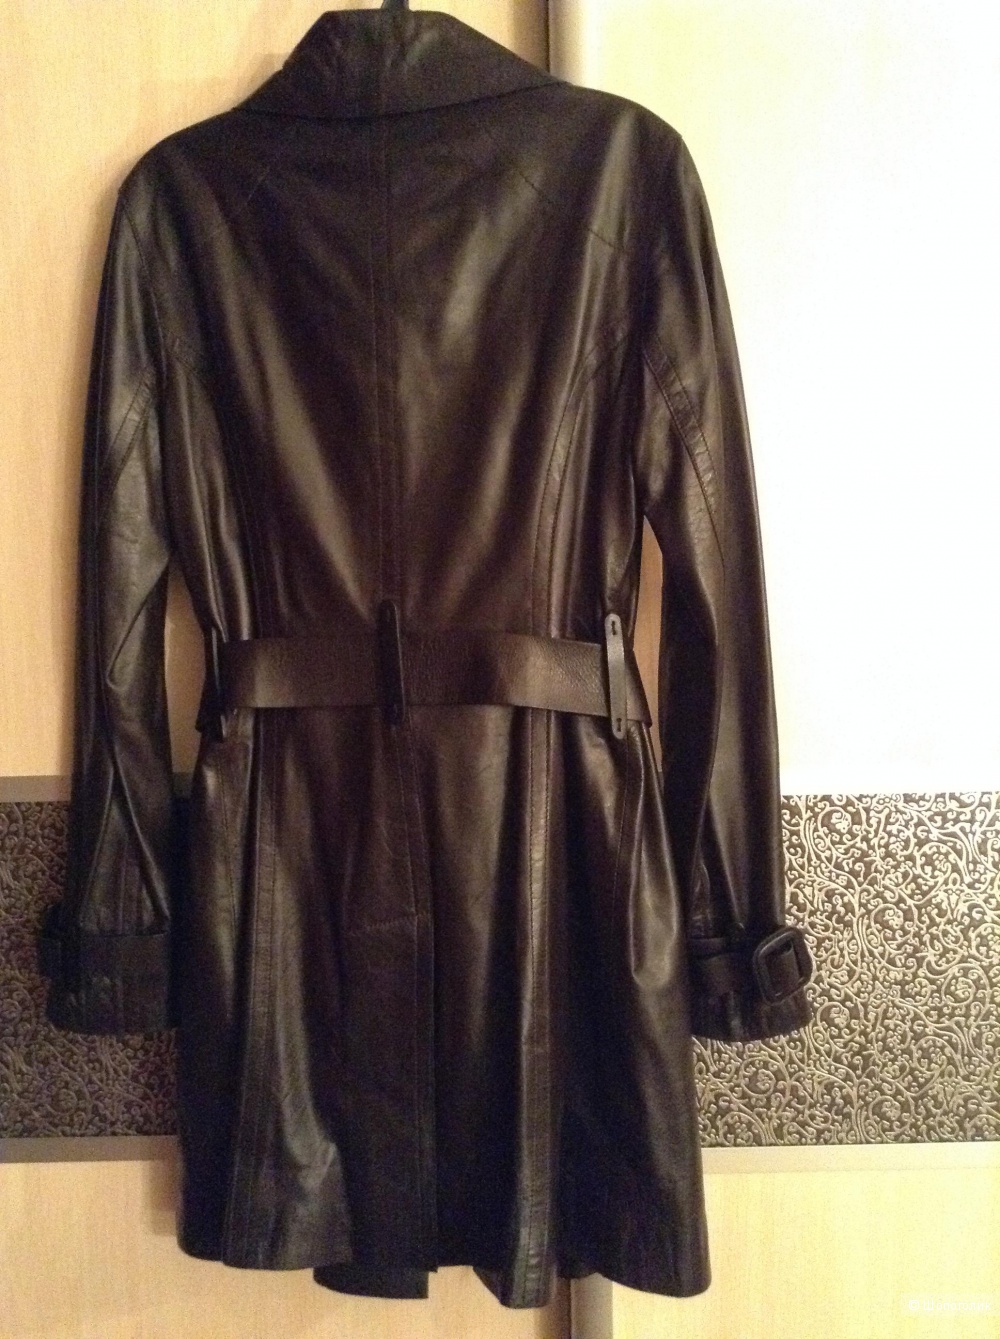 Кожаная куртка-плащ Vespucci, 46 размер